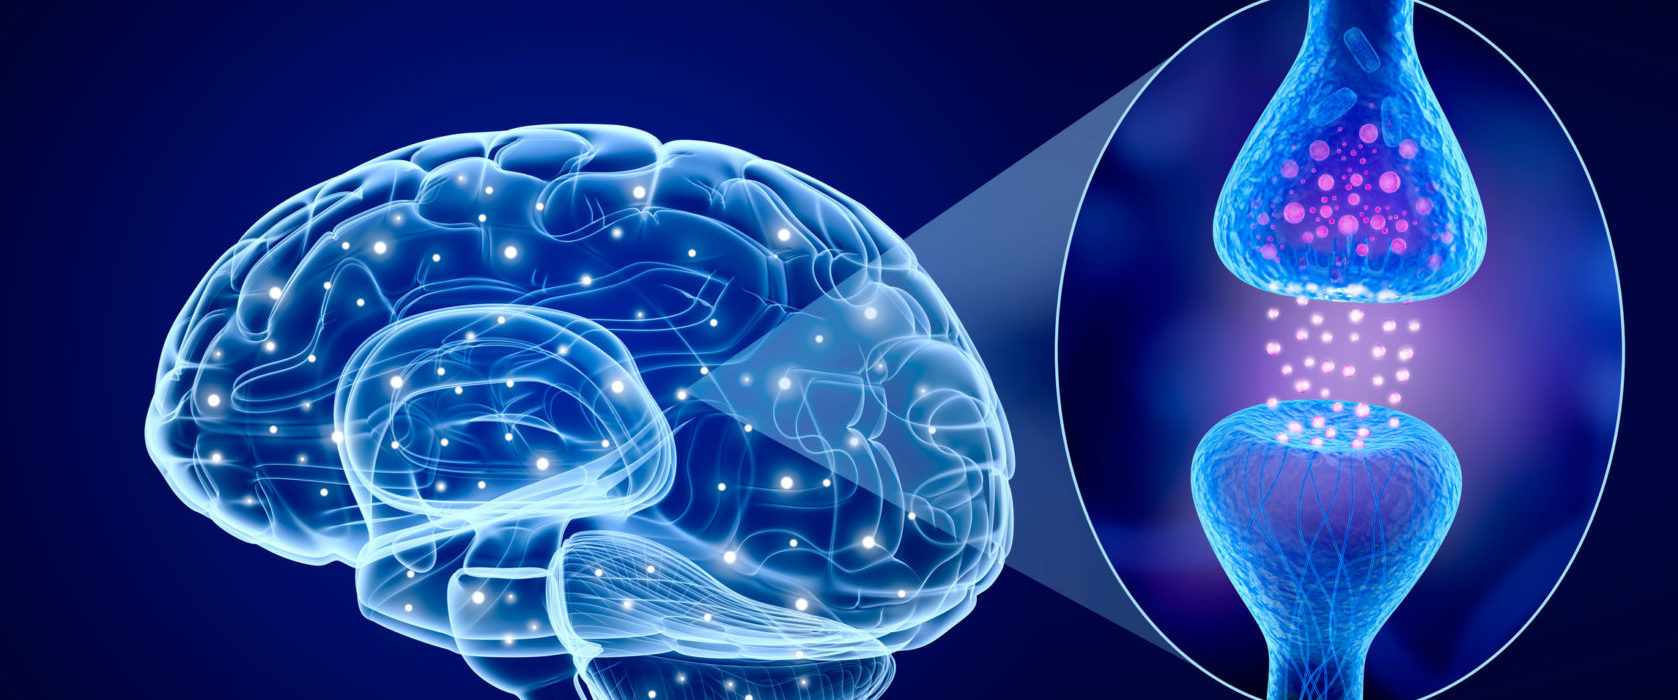 Human brain and Active receptor